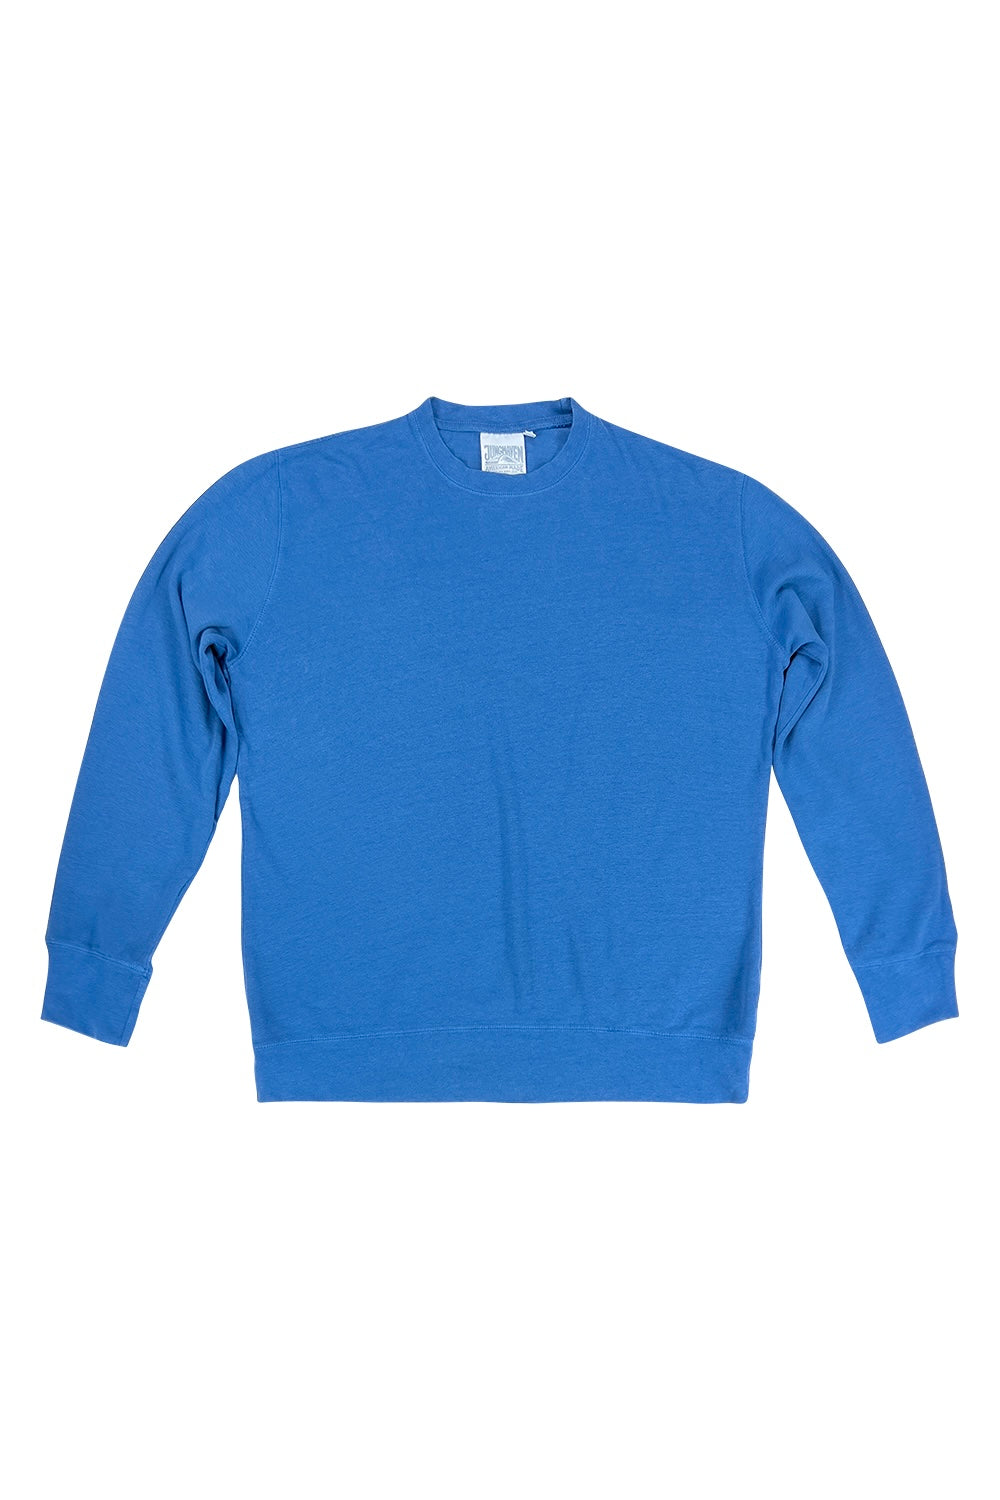 California Pullover | Jungmaven Hemp Clothing & Accessories / Color: Galaxy Blue